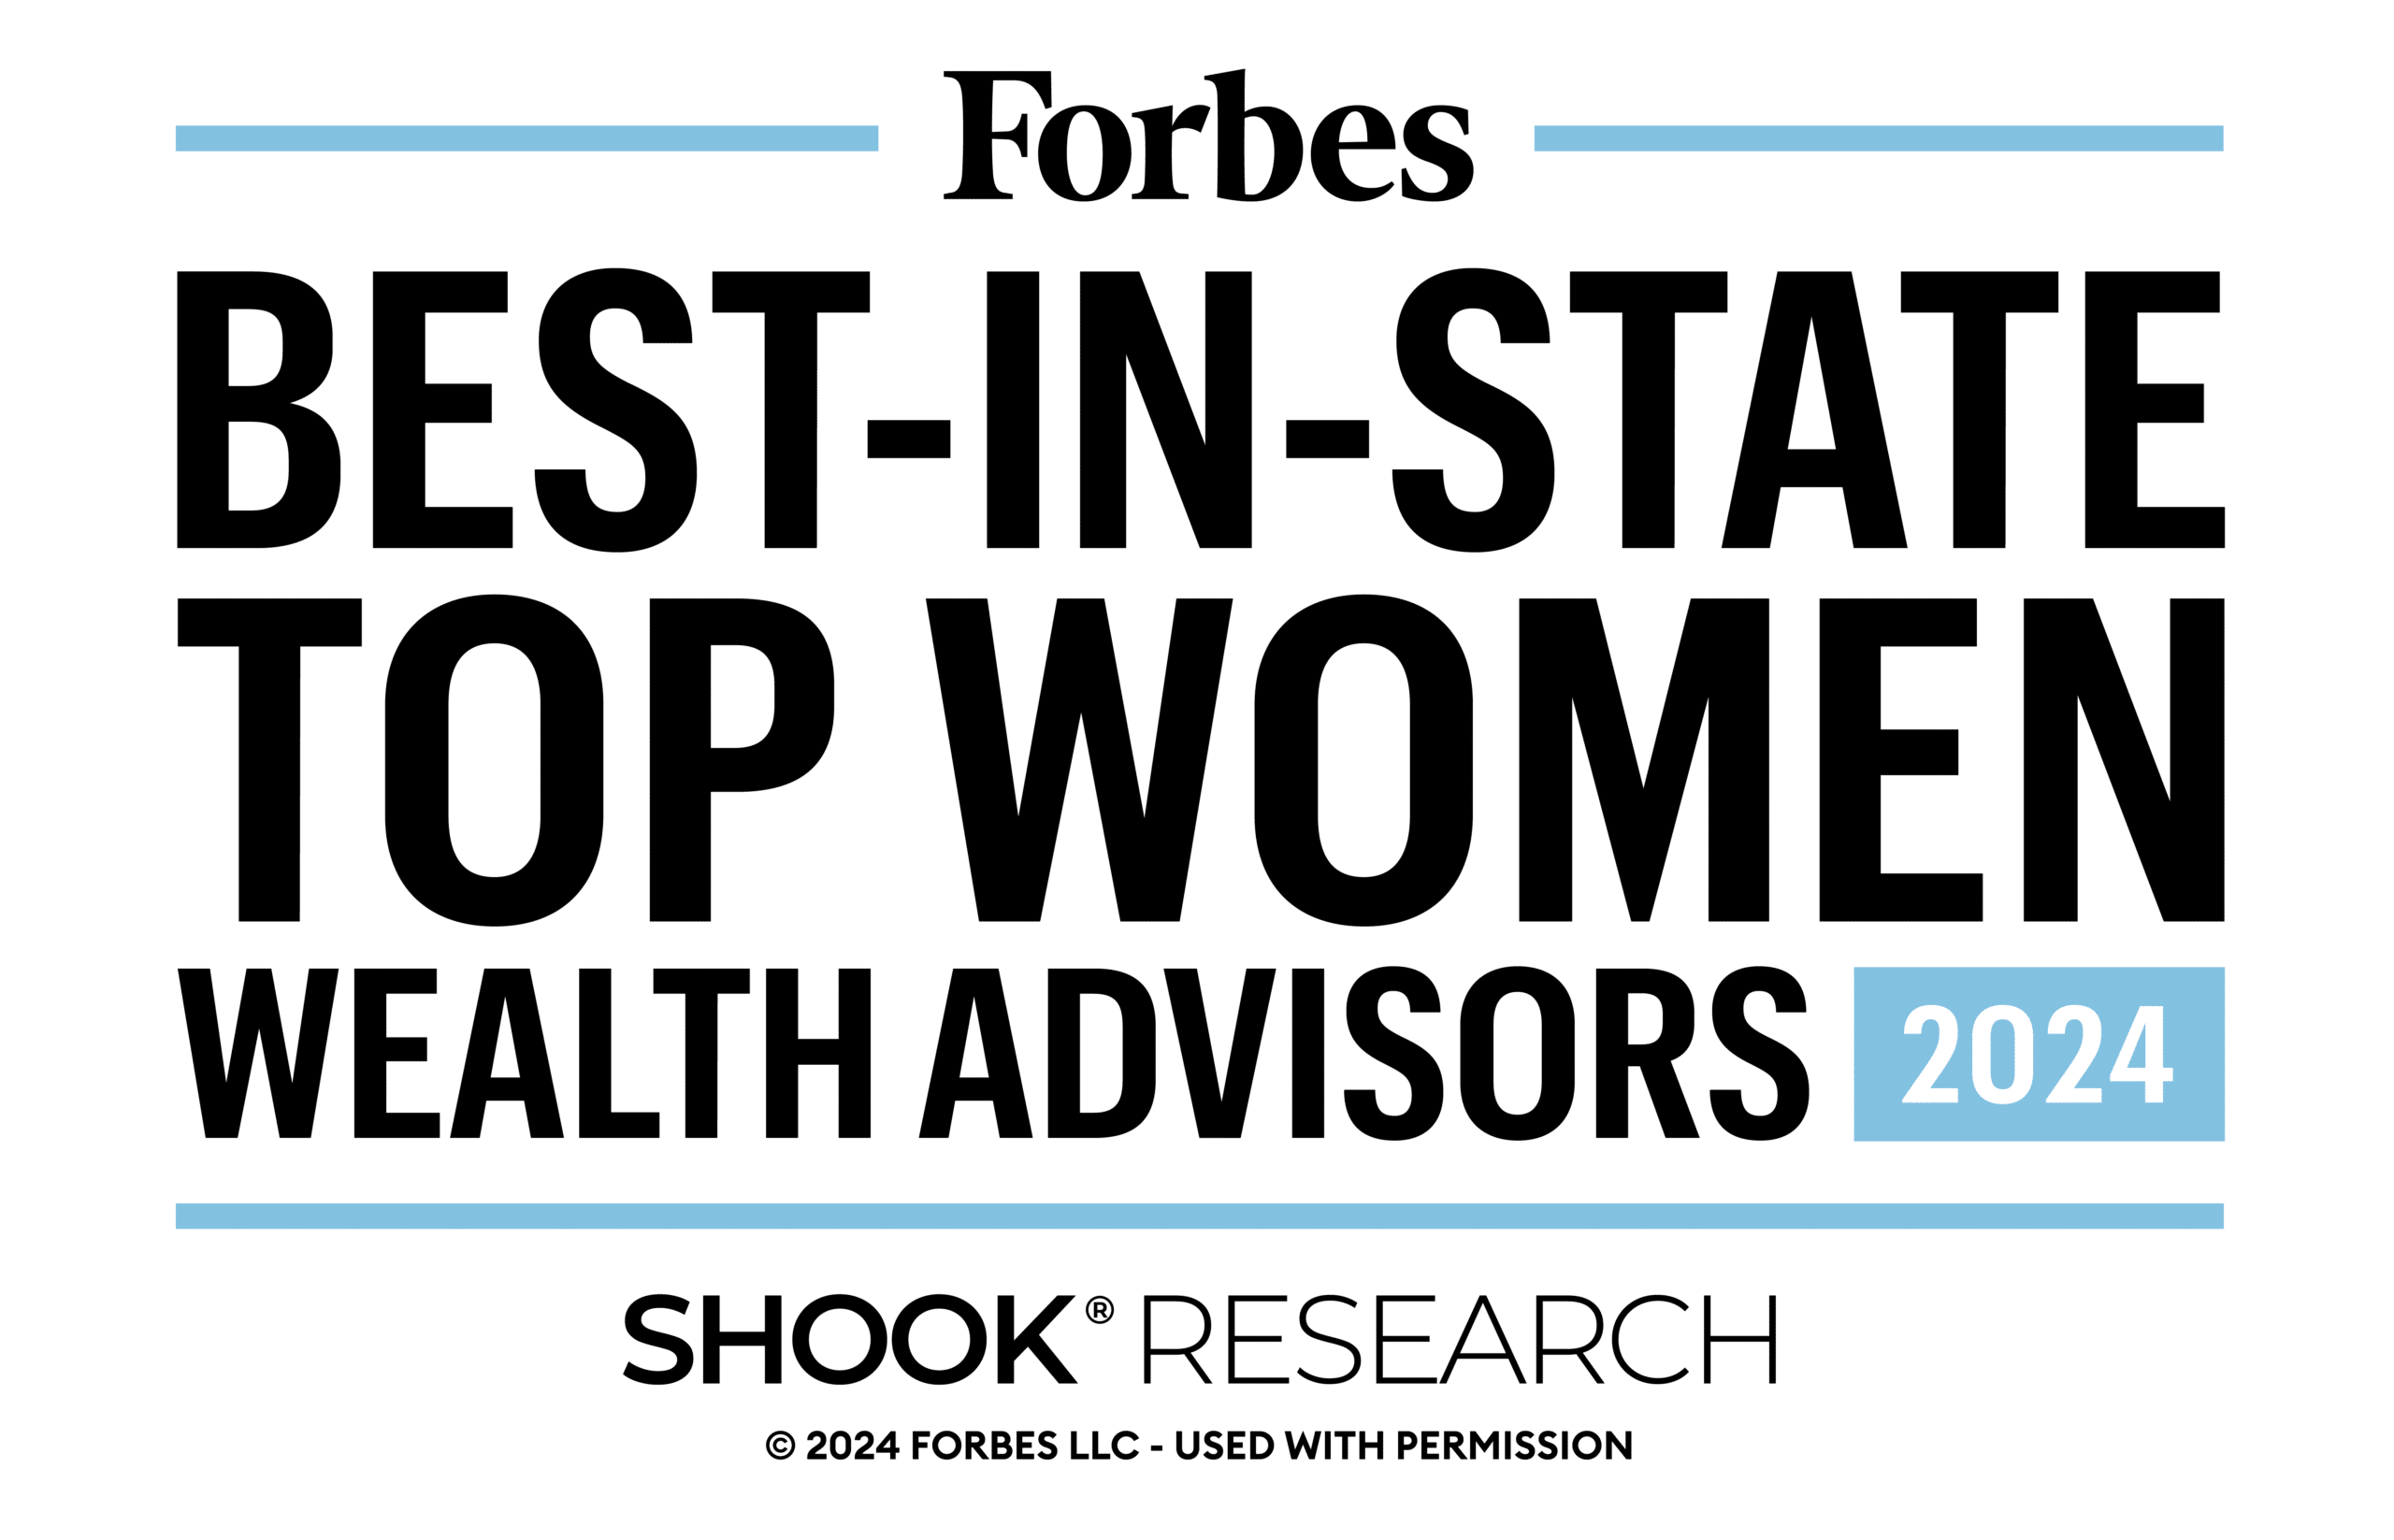 Forbes Top Women Advisors 2021